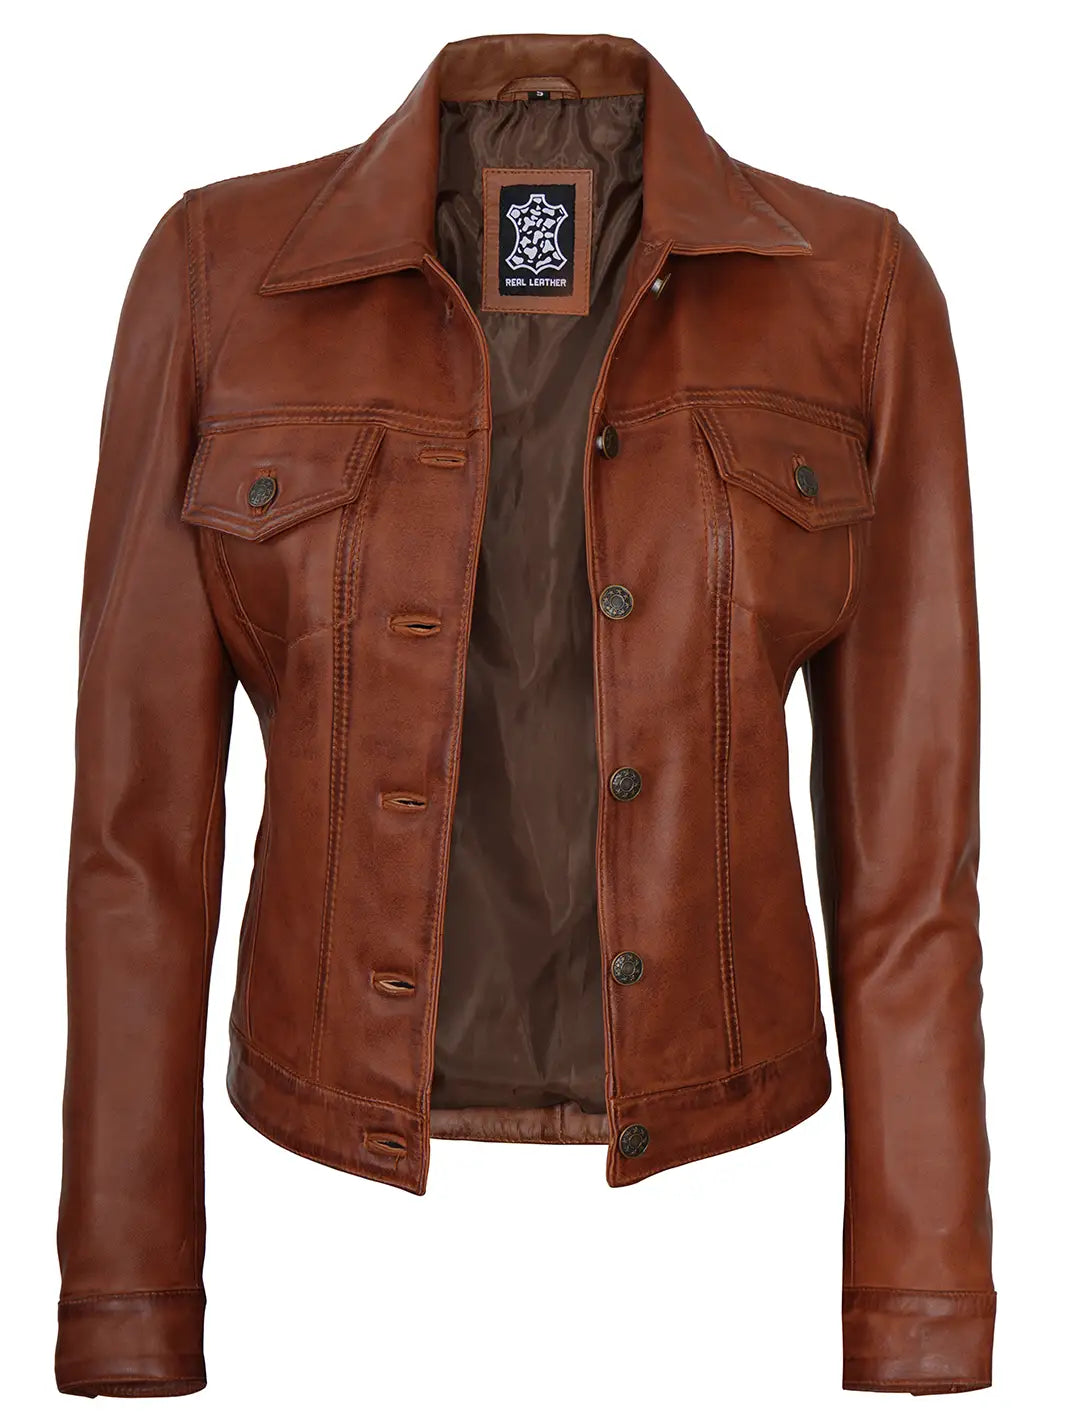 Cognac leather jacket for women